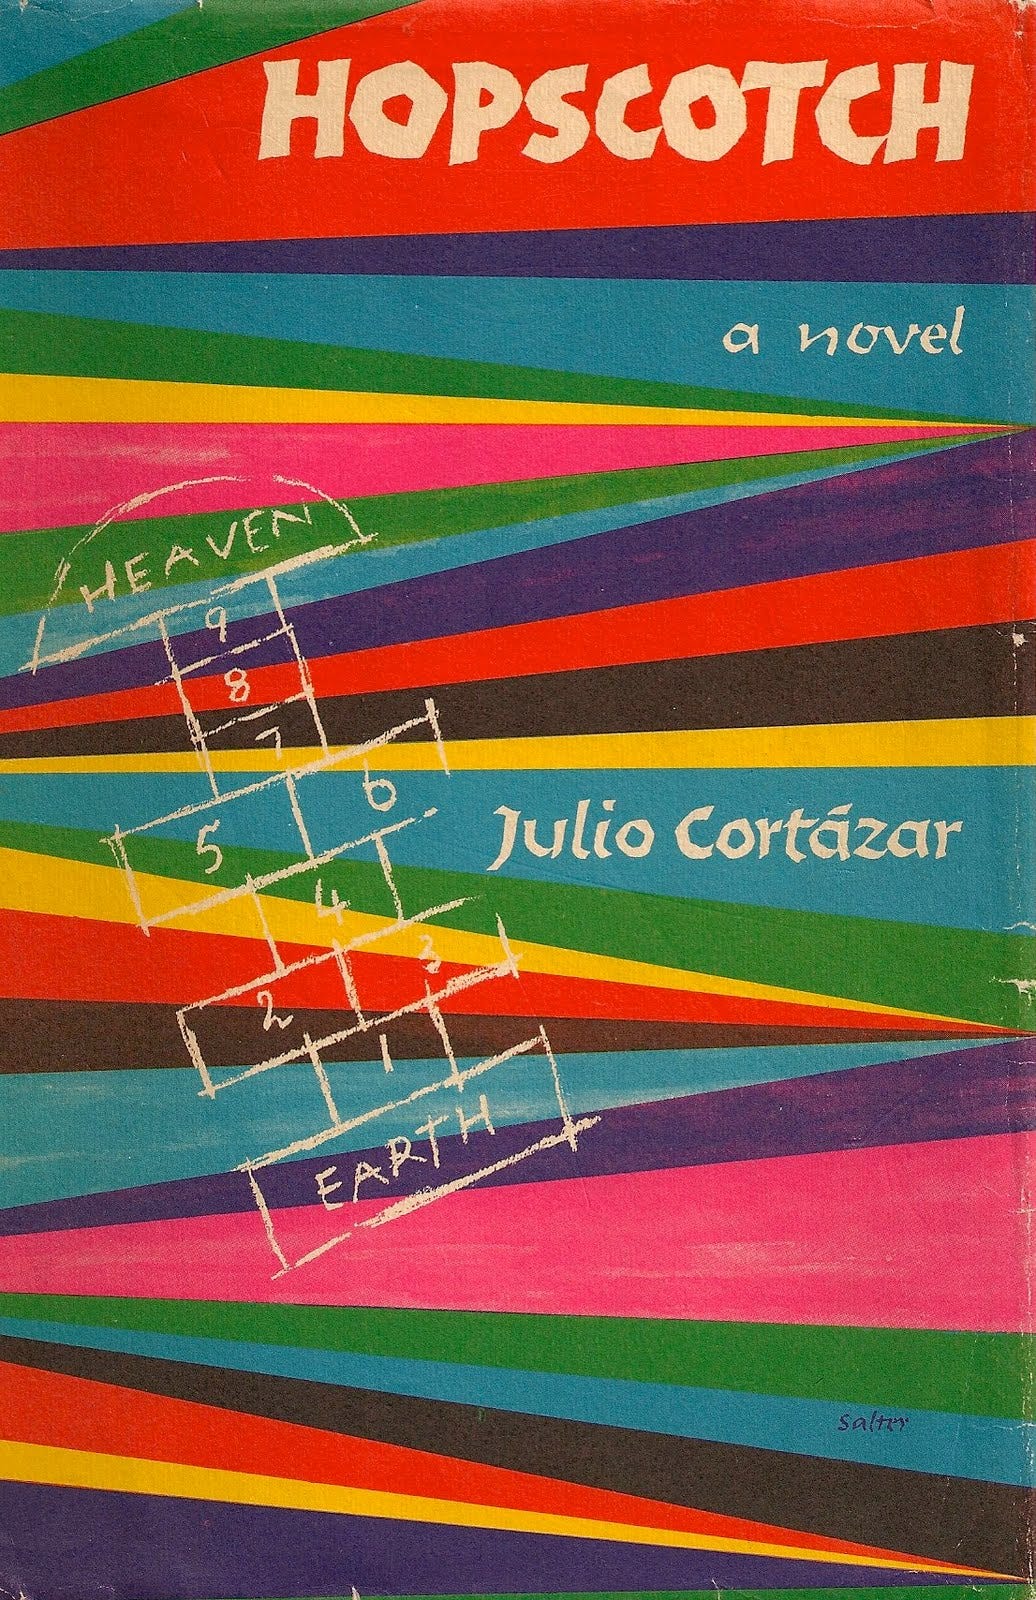 DRAGON: Julio Cortázar / Hopscotch